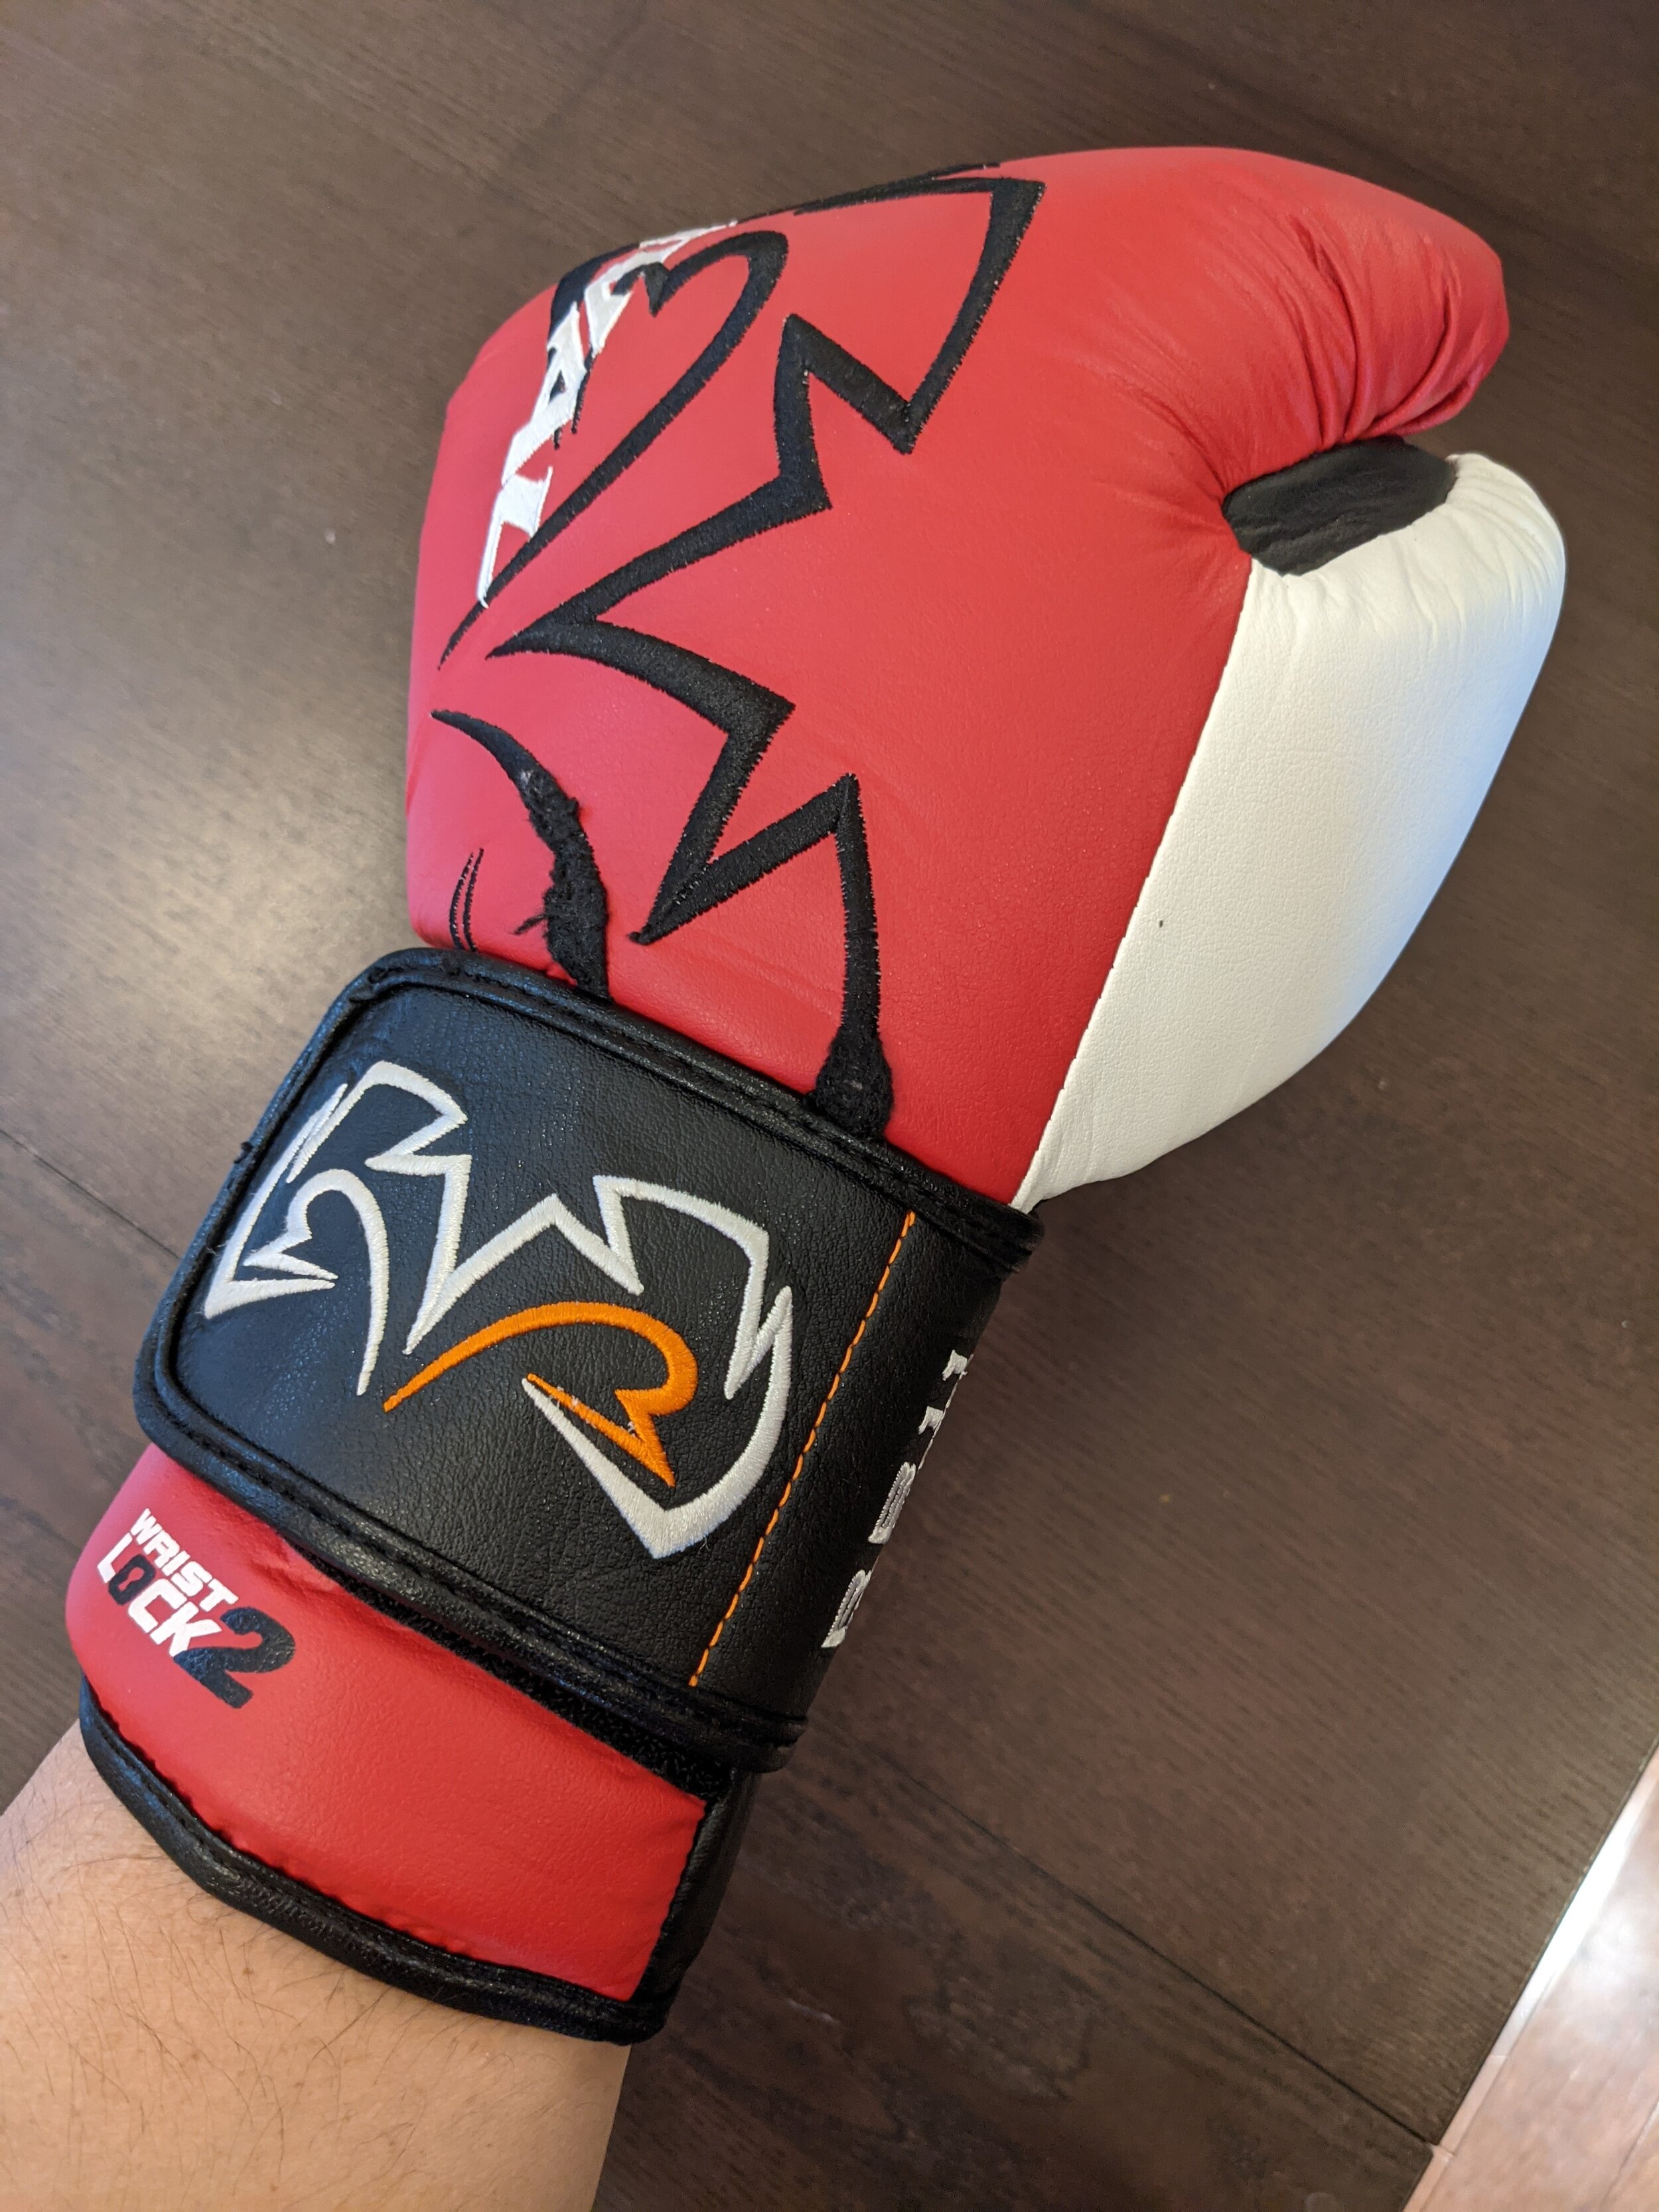 Rival RB11v (XL Bag Gloves) — Fightglove Reviews